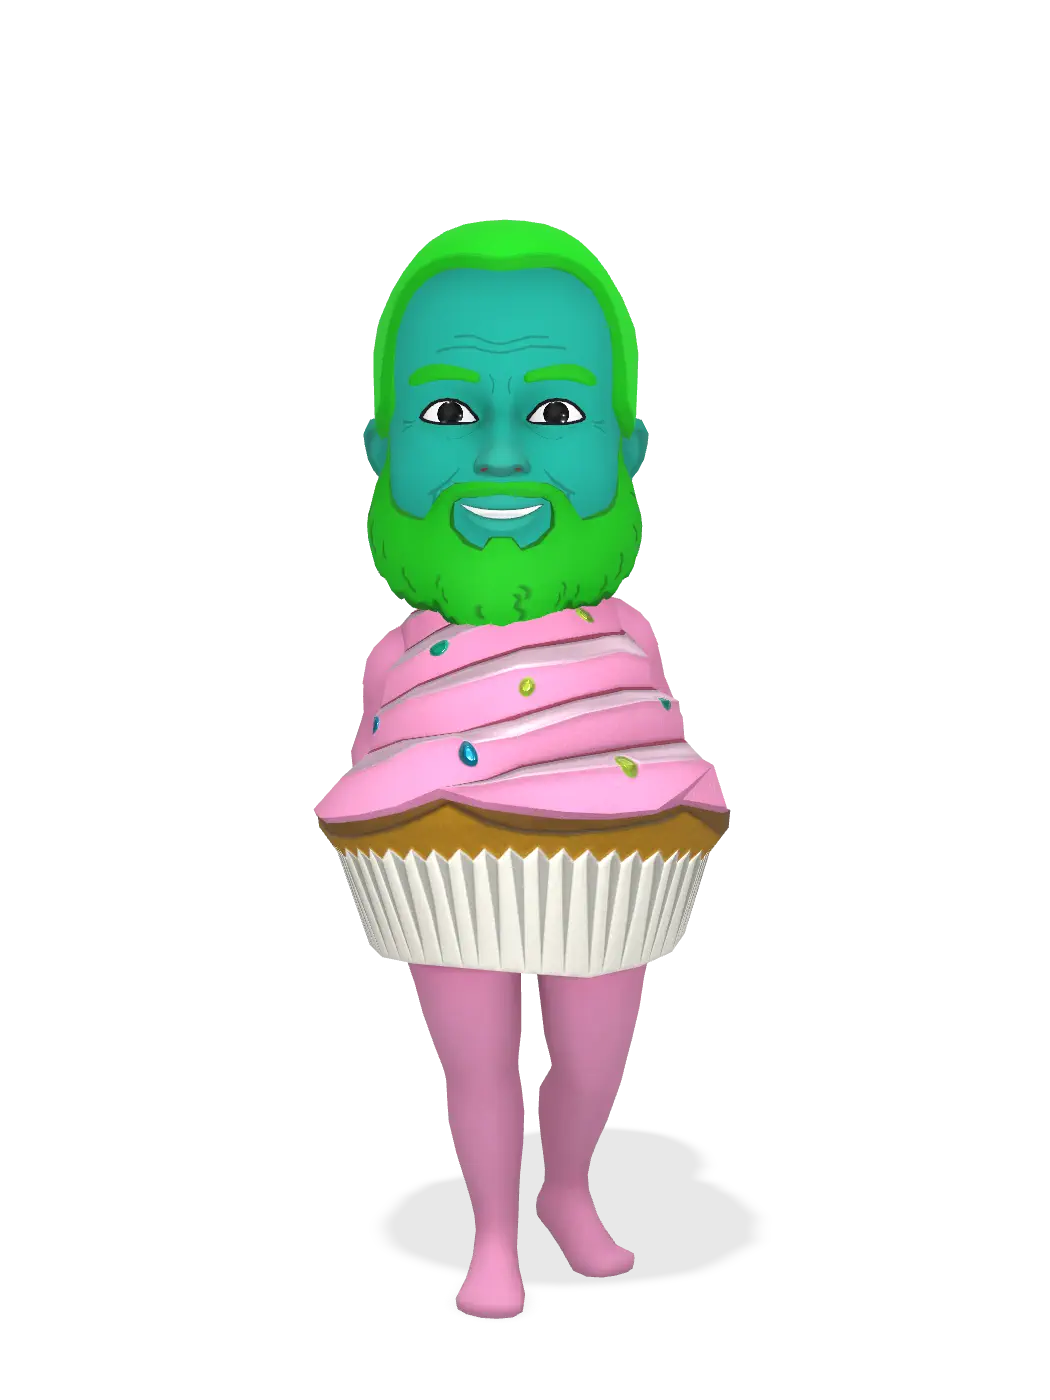 3D Bitmoji for weisiongxd avatar